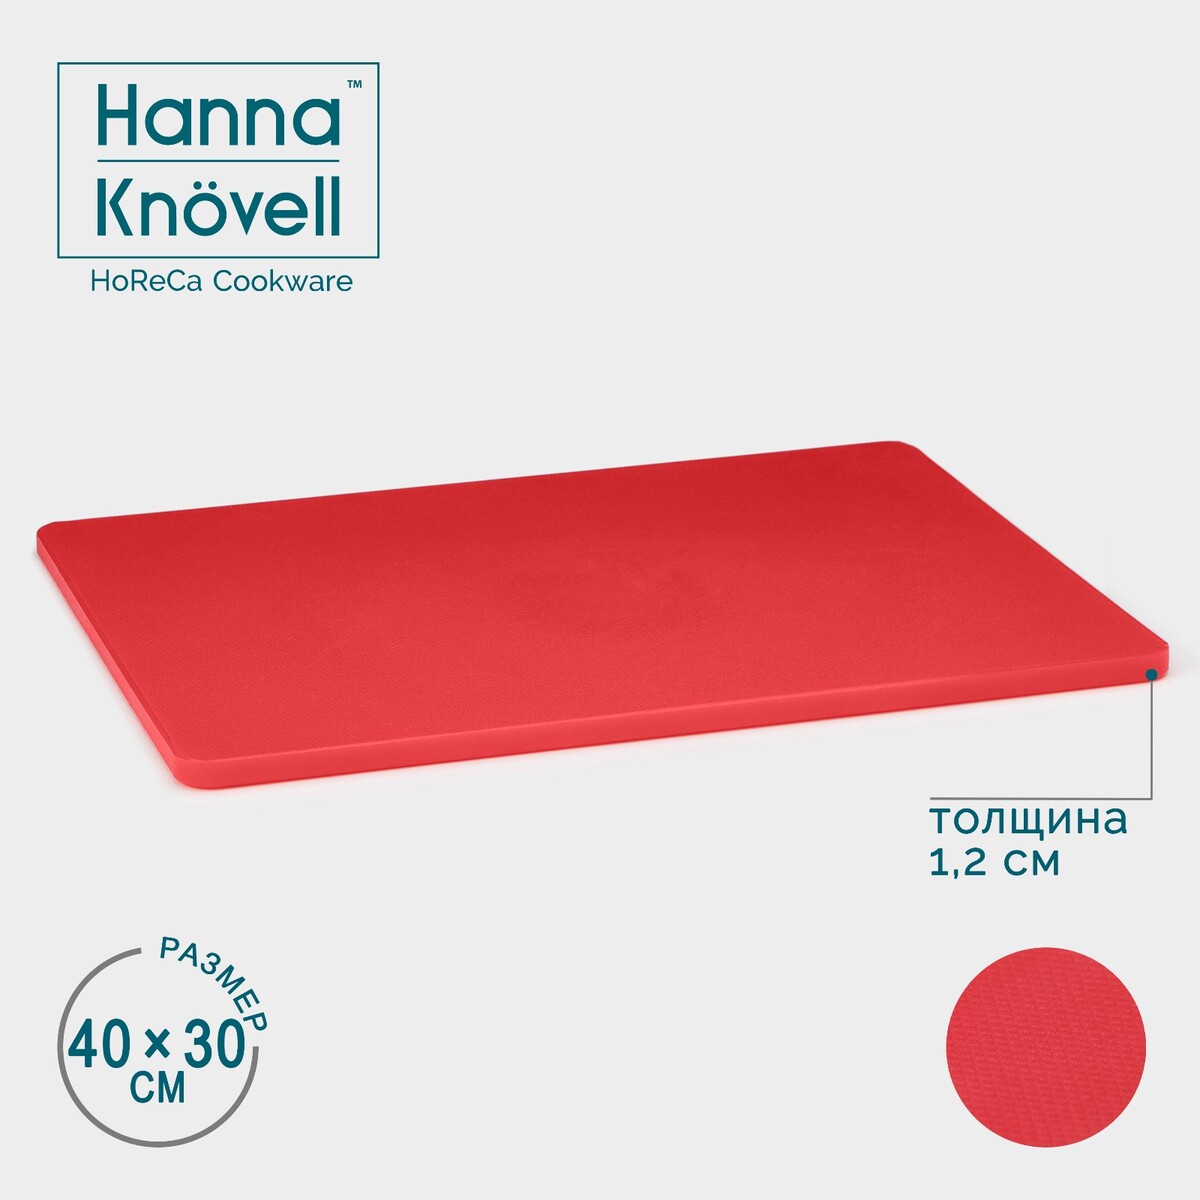 Доска профессиональная разделочная hanna knövell, 40×30×1,2 см, цвет красный доска разделочная пластик для рыбы 50х18х4 см зеленая y4 6477